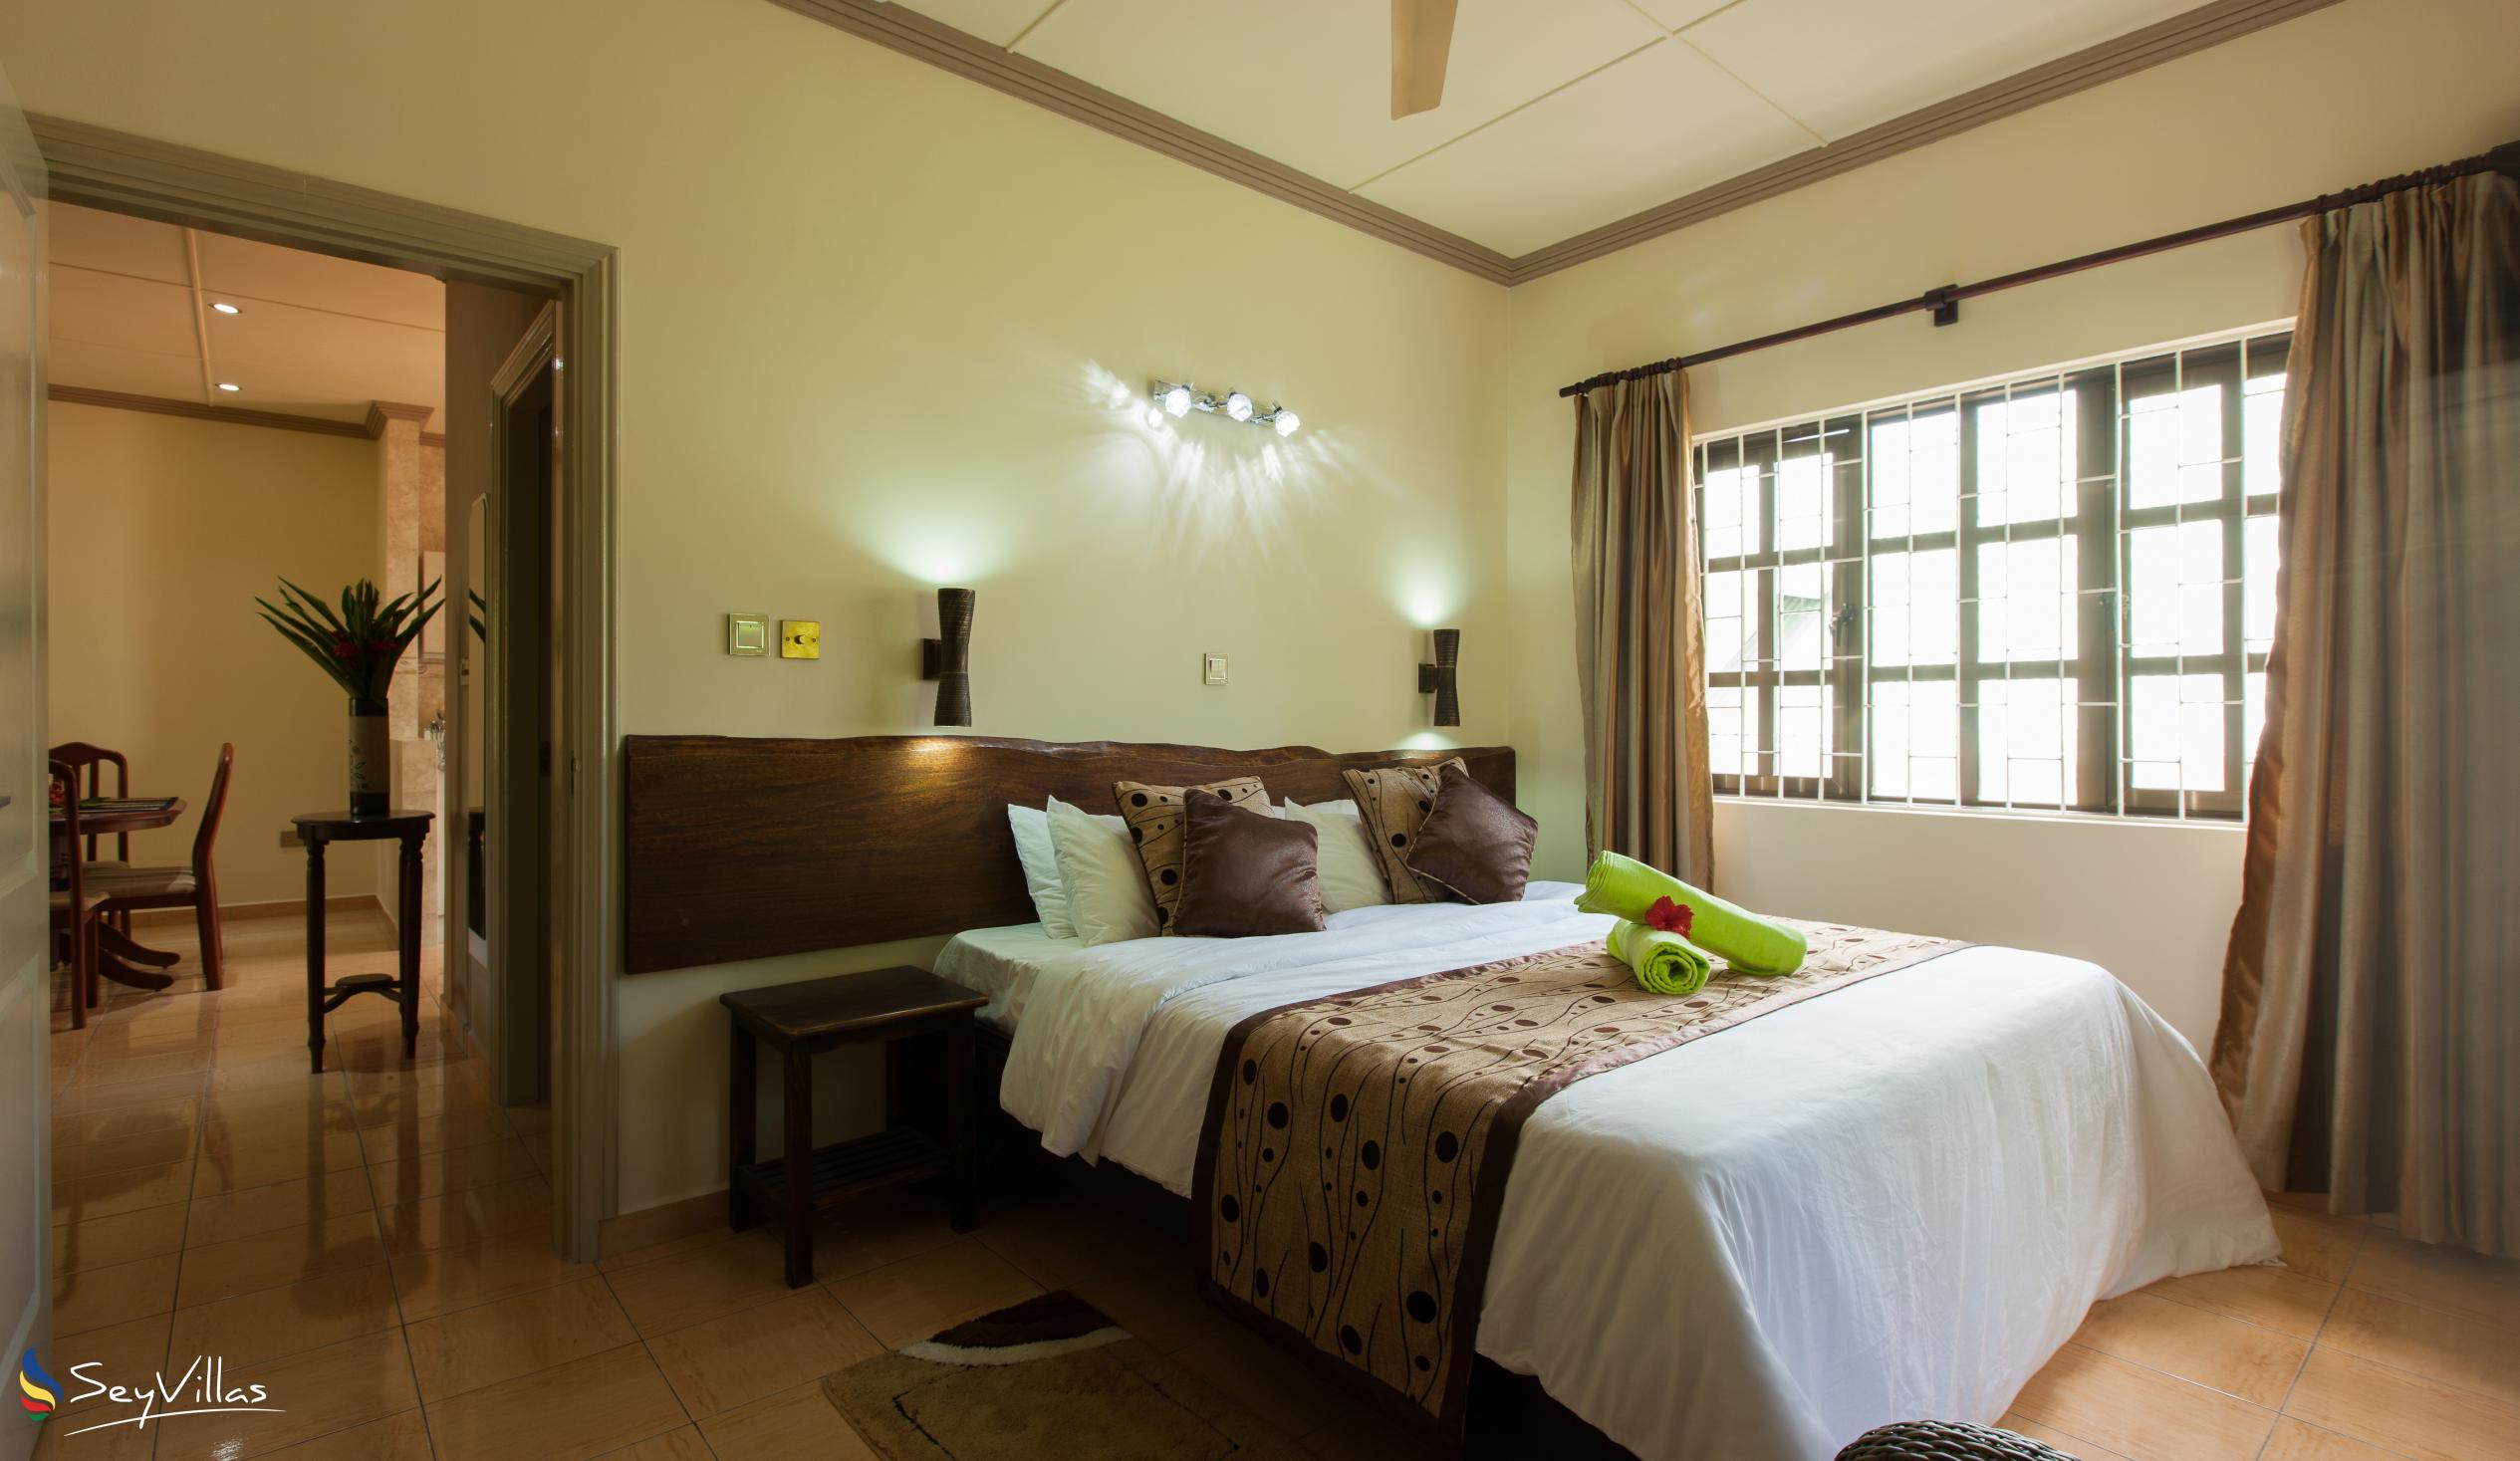 Photo 81: Chez Bea Villa - Superior Room - Praslin (Seychelles)